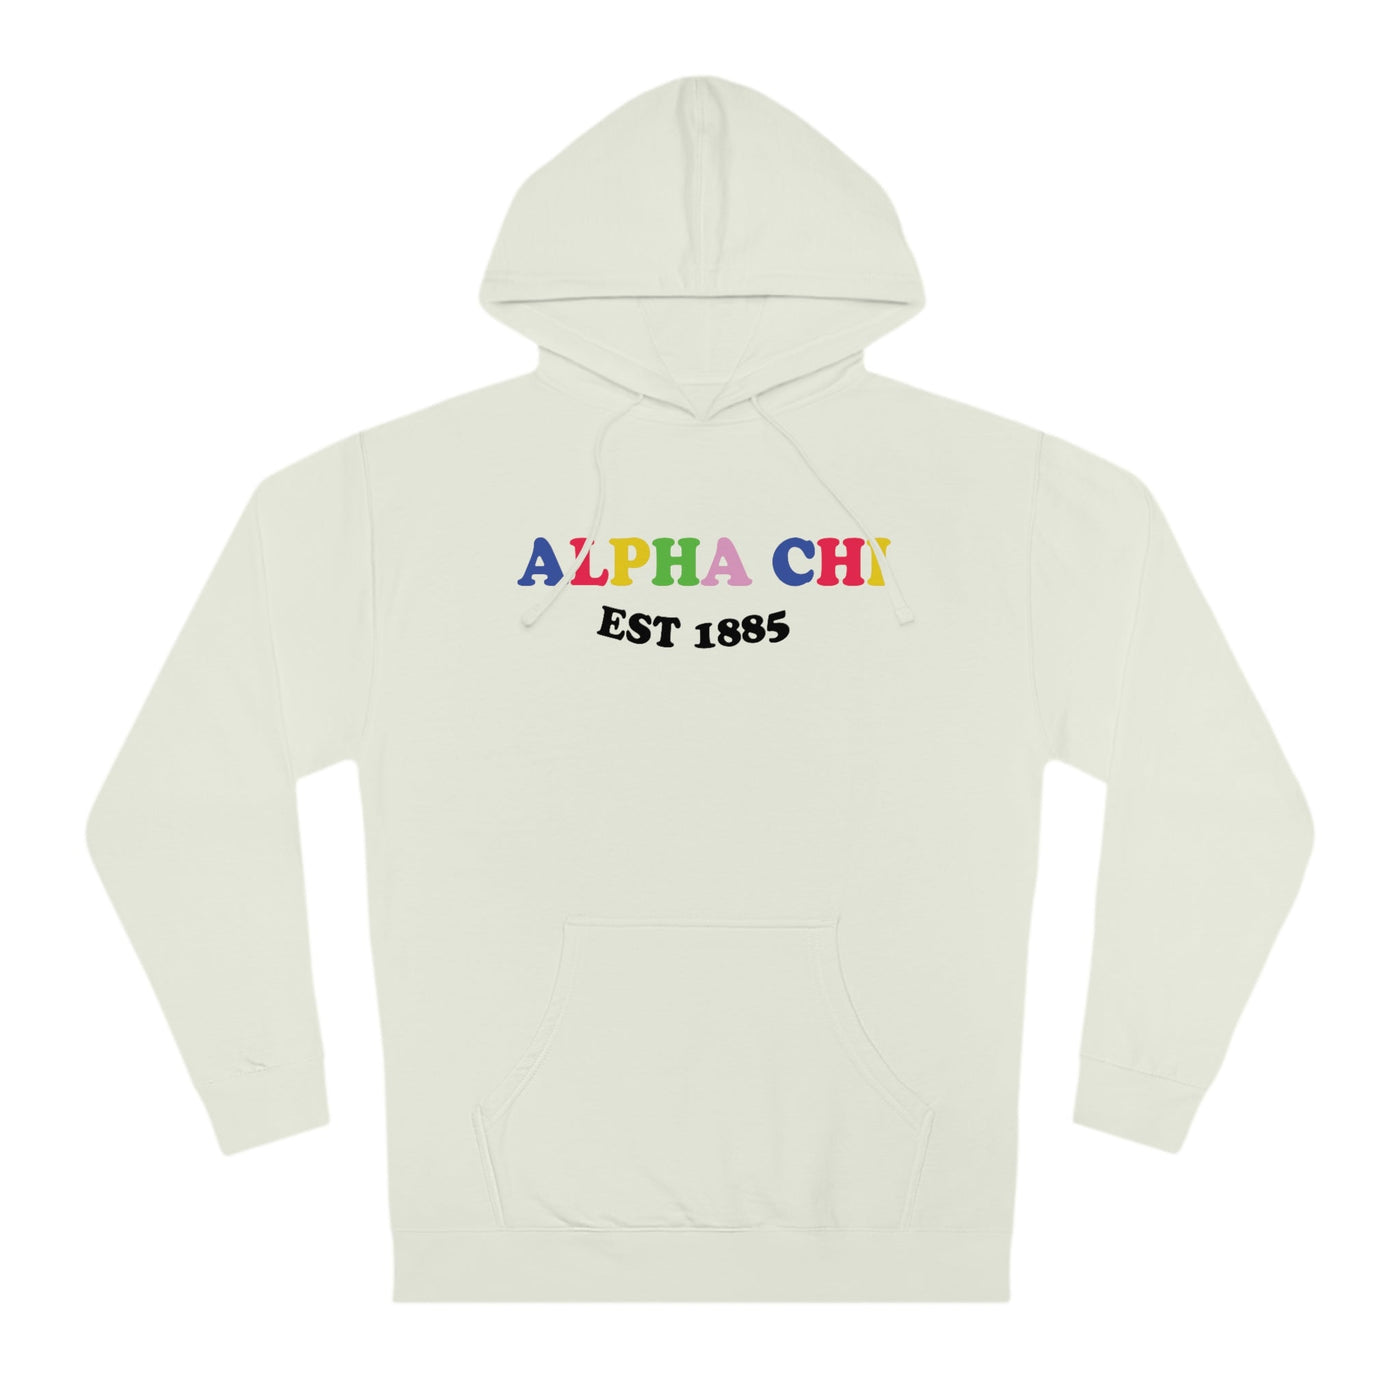 Alpha Chi Omega Colorful Sorority Sweatshirt Cozy Hoodie